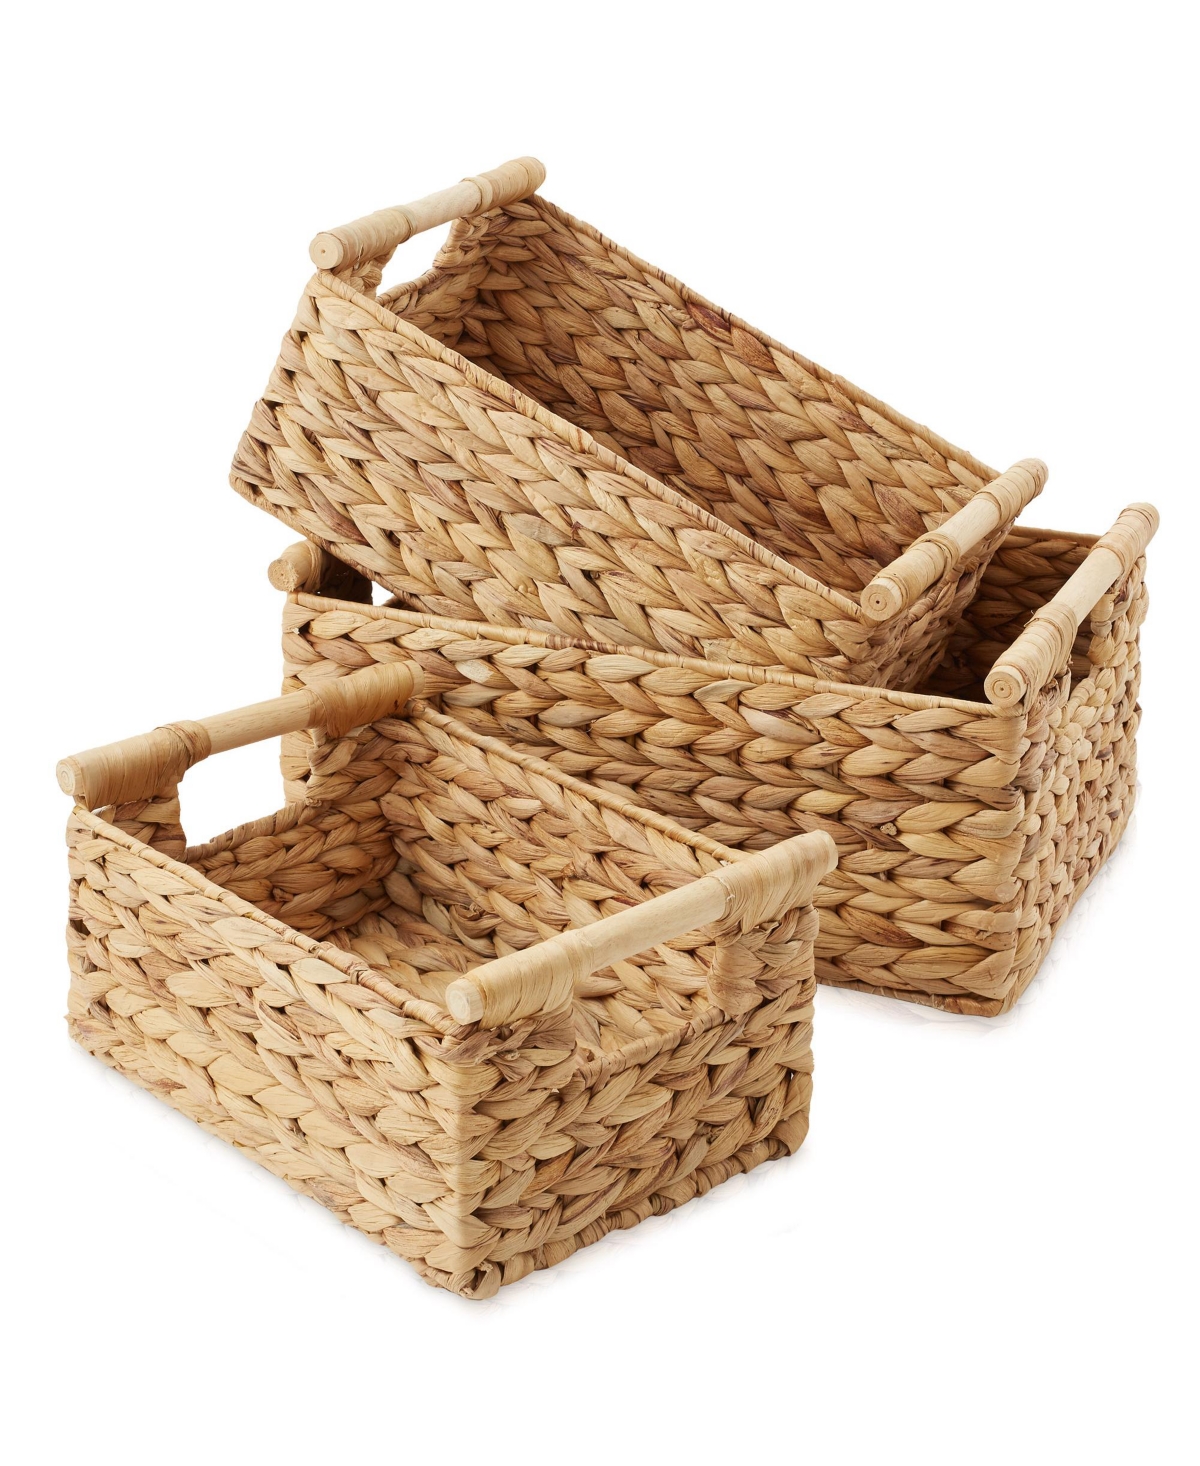 (Set of 3) Water Hyacinth Rectangular Storage Baskets with Wooden Handles - Small, Medium, Large Woven Nesting Baskets - Natural - hyacinth